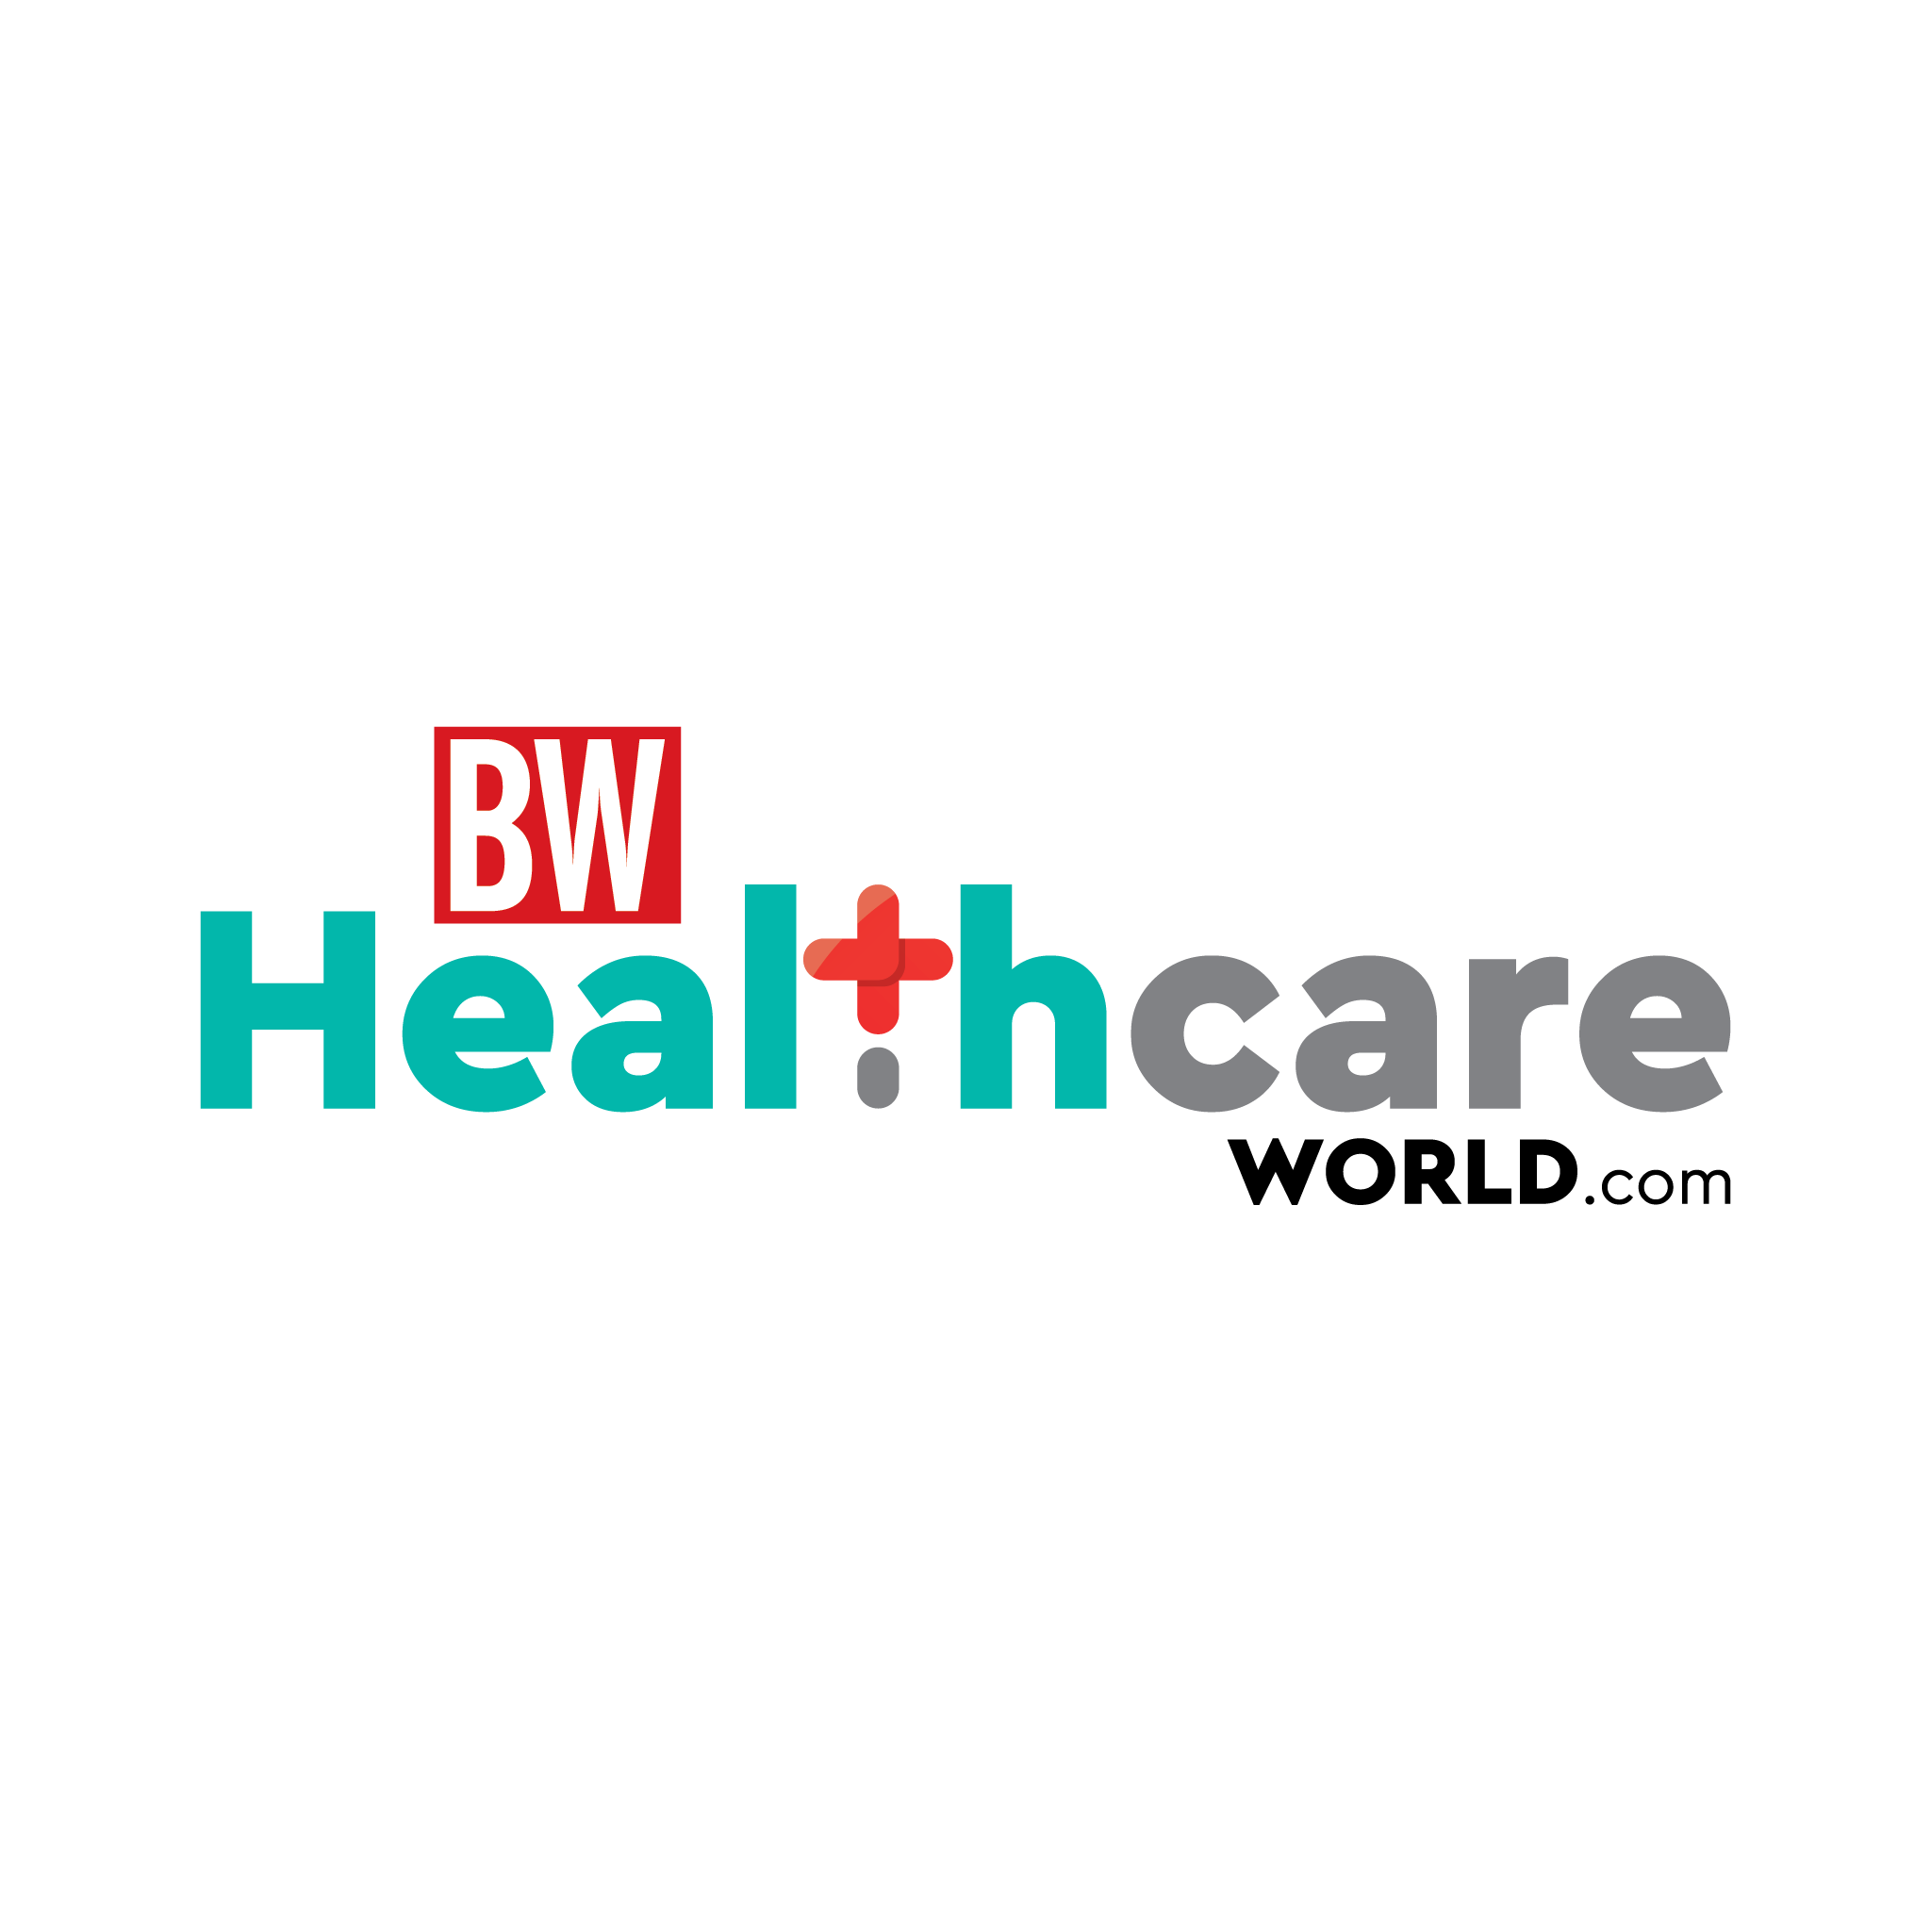 BW Healthcare